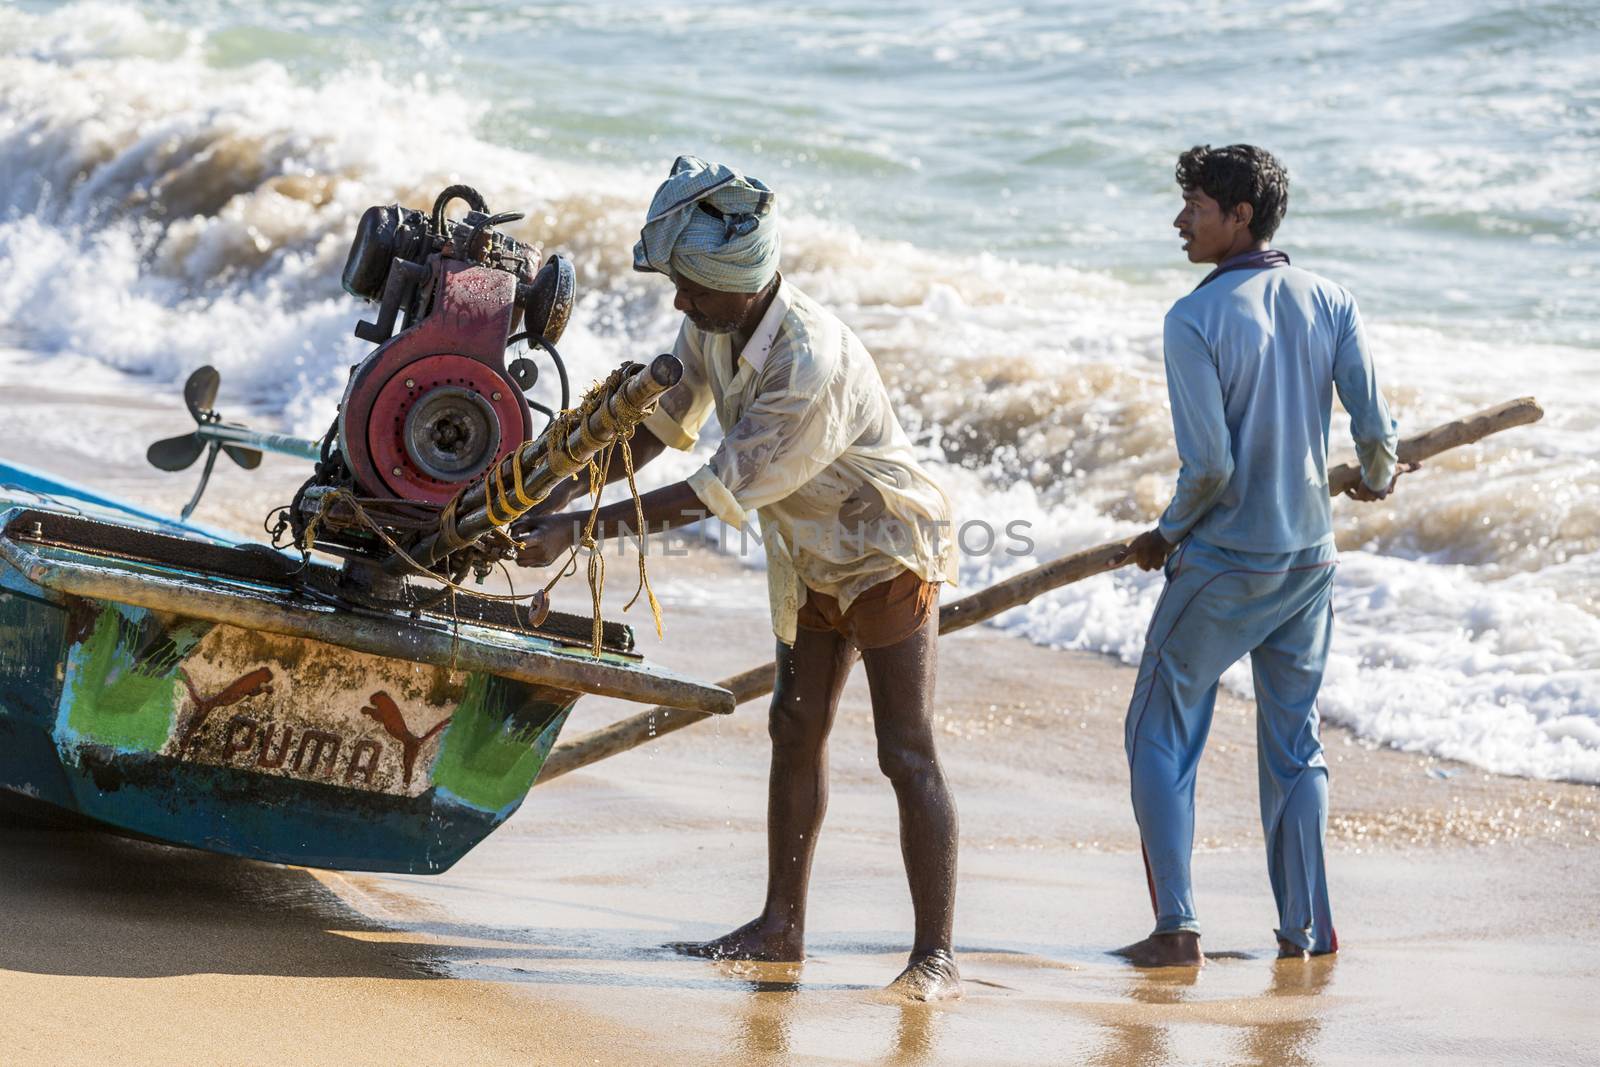 Pondichery, Tamil Nadu, India - February 27, 2014 : Traditional fishermen on beach, on sea, on sand. Long boats, Hard work poor people